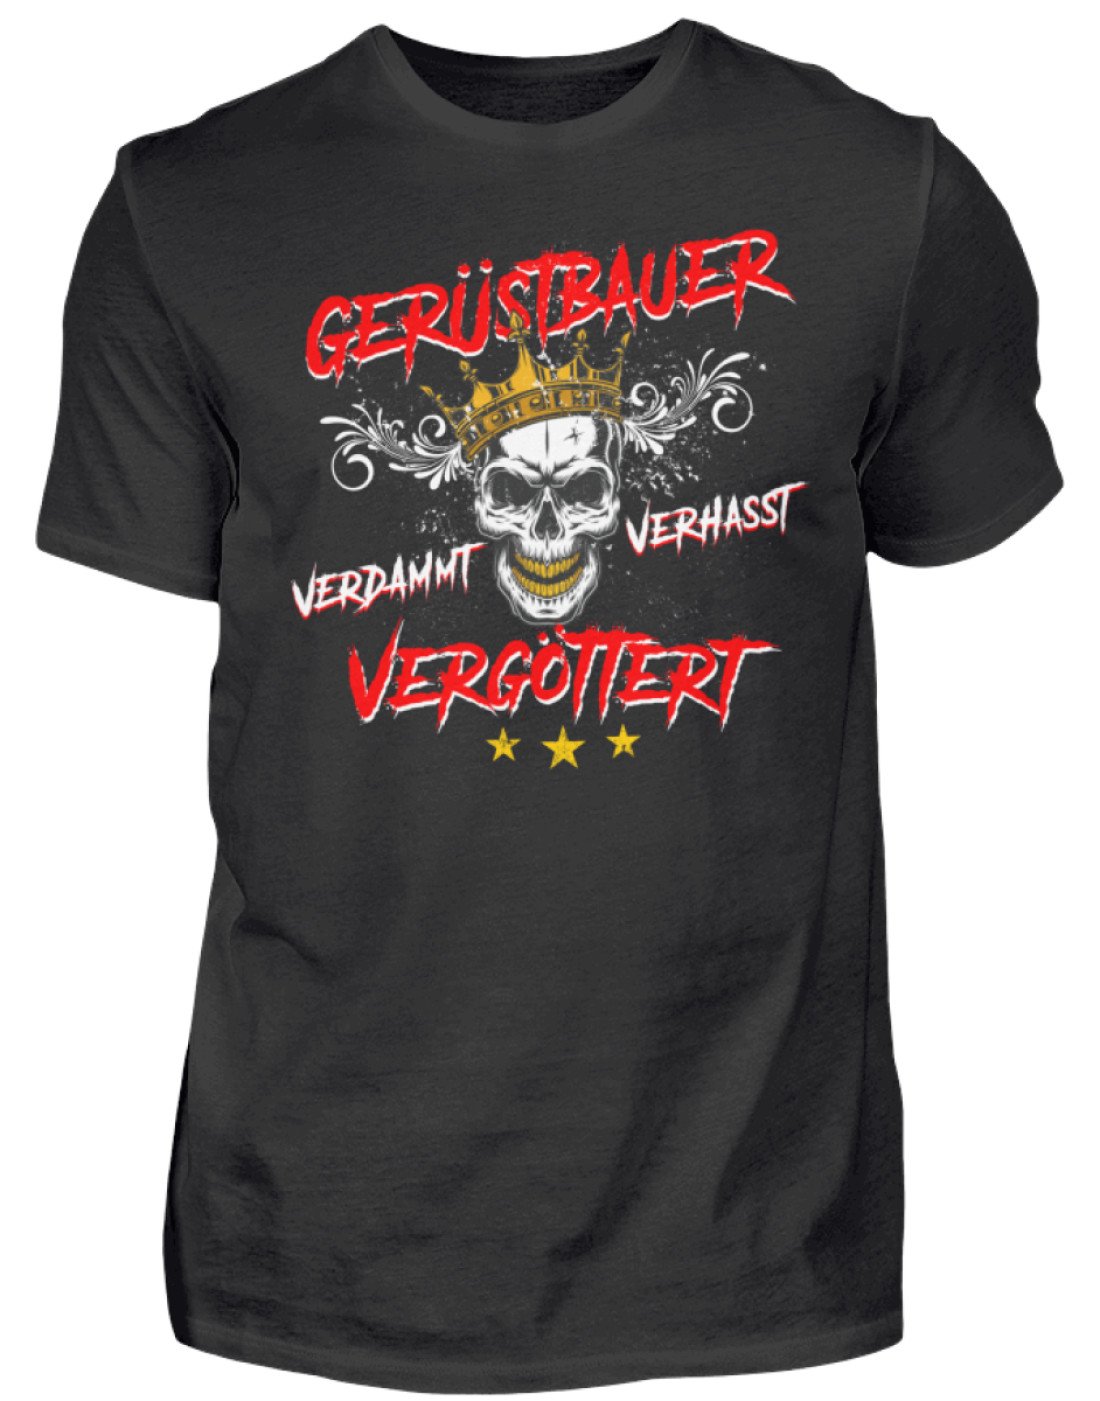 Gerüstbauer Shirt / Vergöttert €22.95 Gerüstbauer - Shop >>